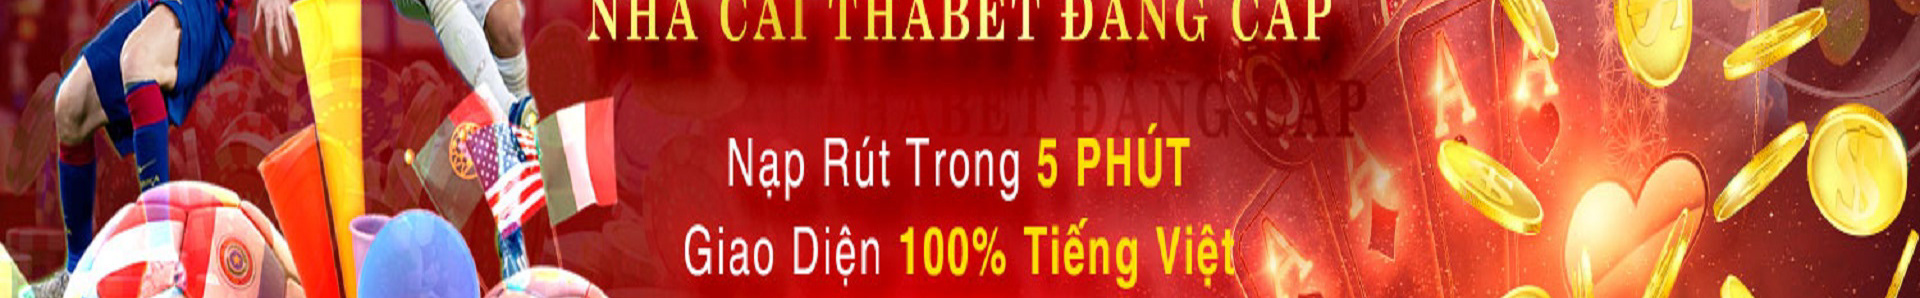 Banner de perfil de THABET CO Official